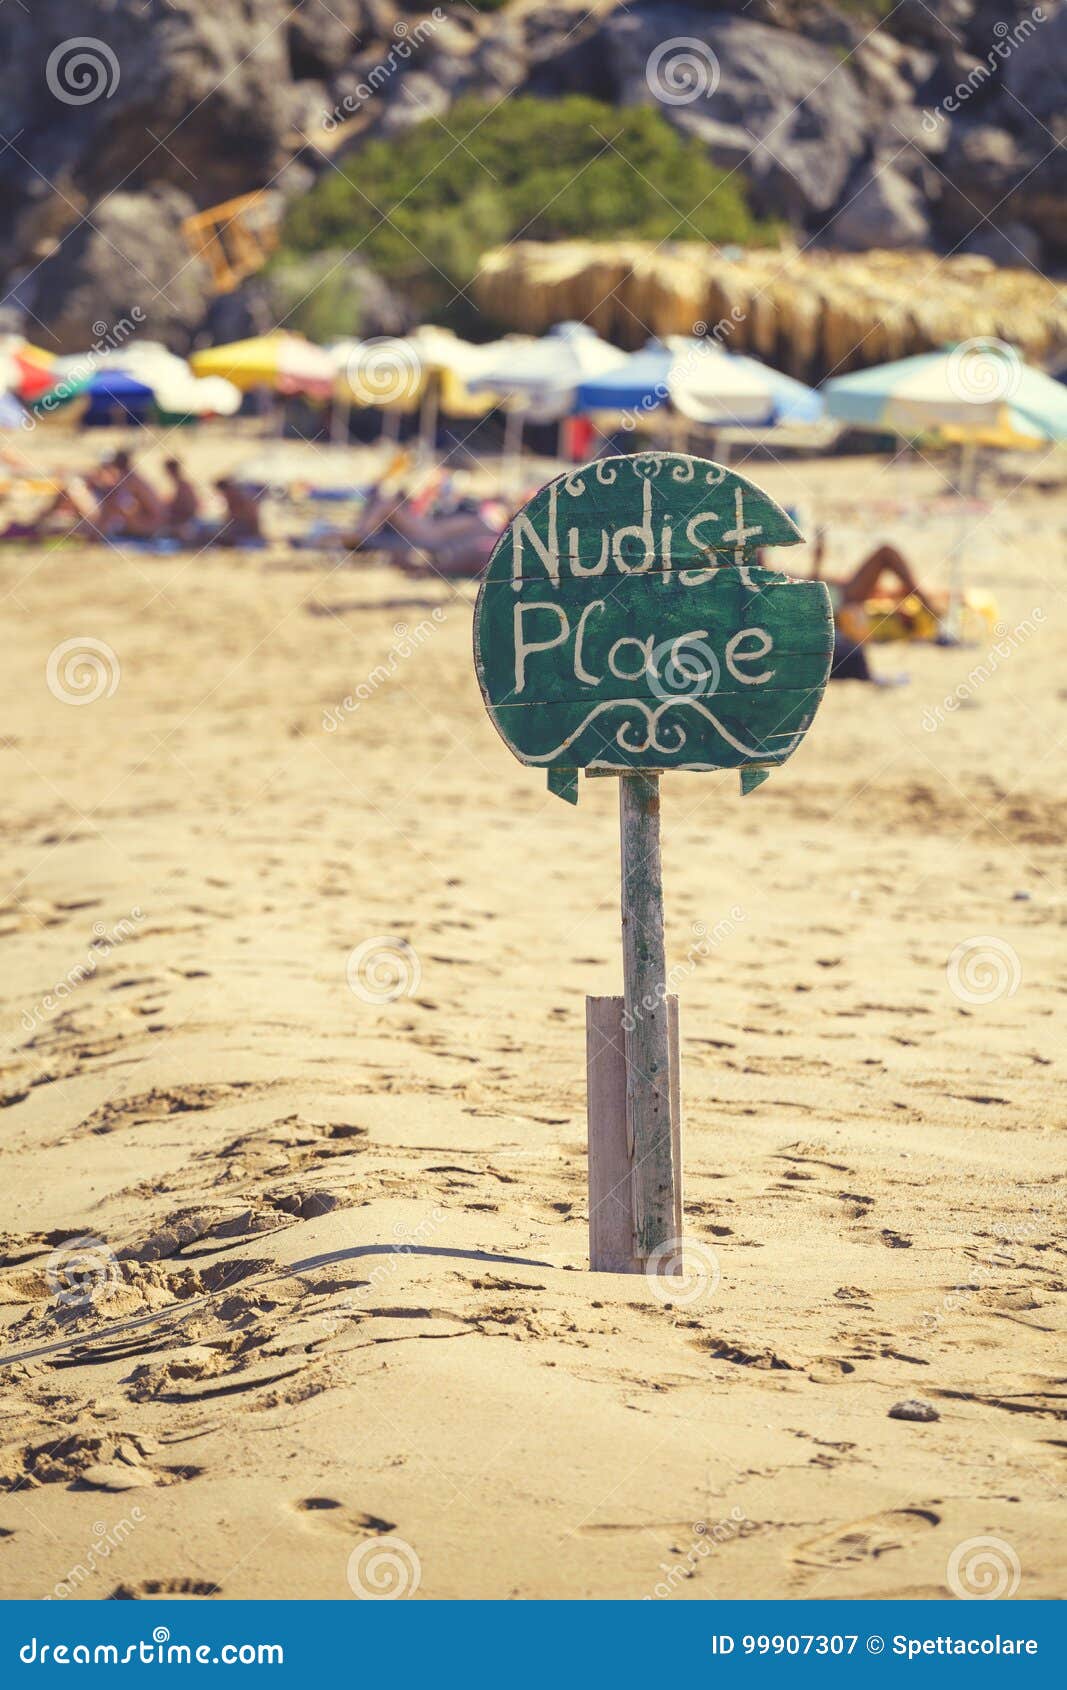 nude beach voyeur video Adult Pictures